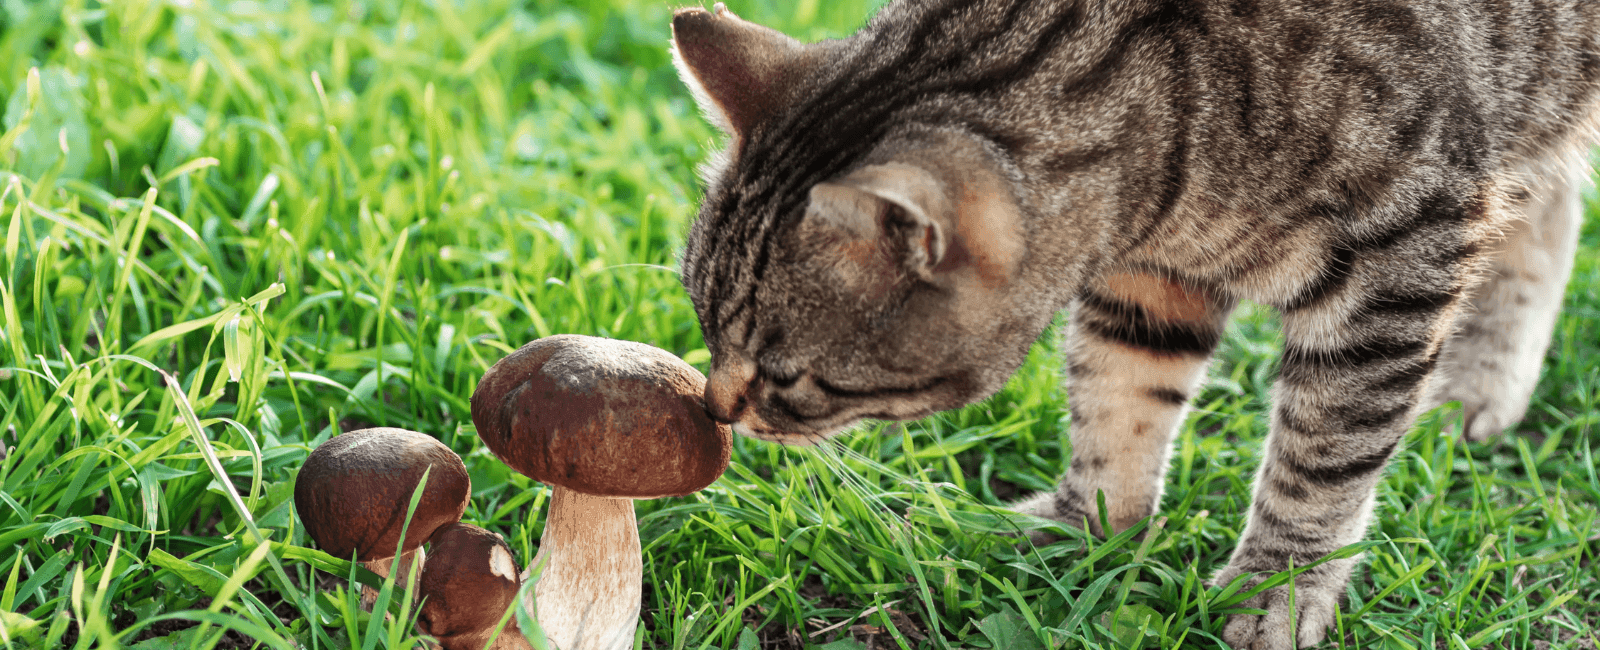 Fungi and Feline Friends: Can Cats Eat Mushrooms?